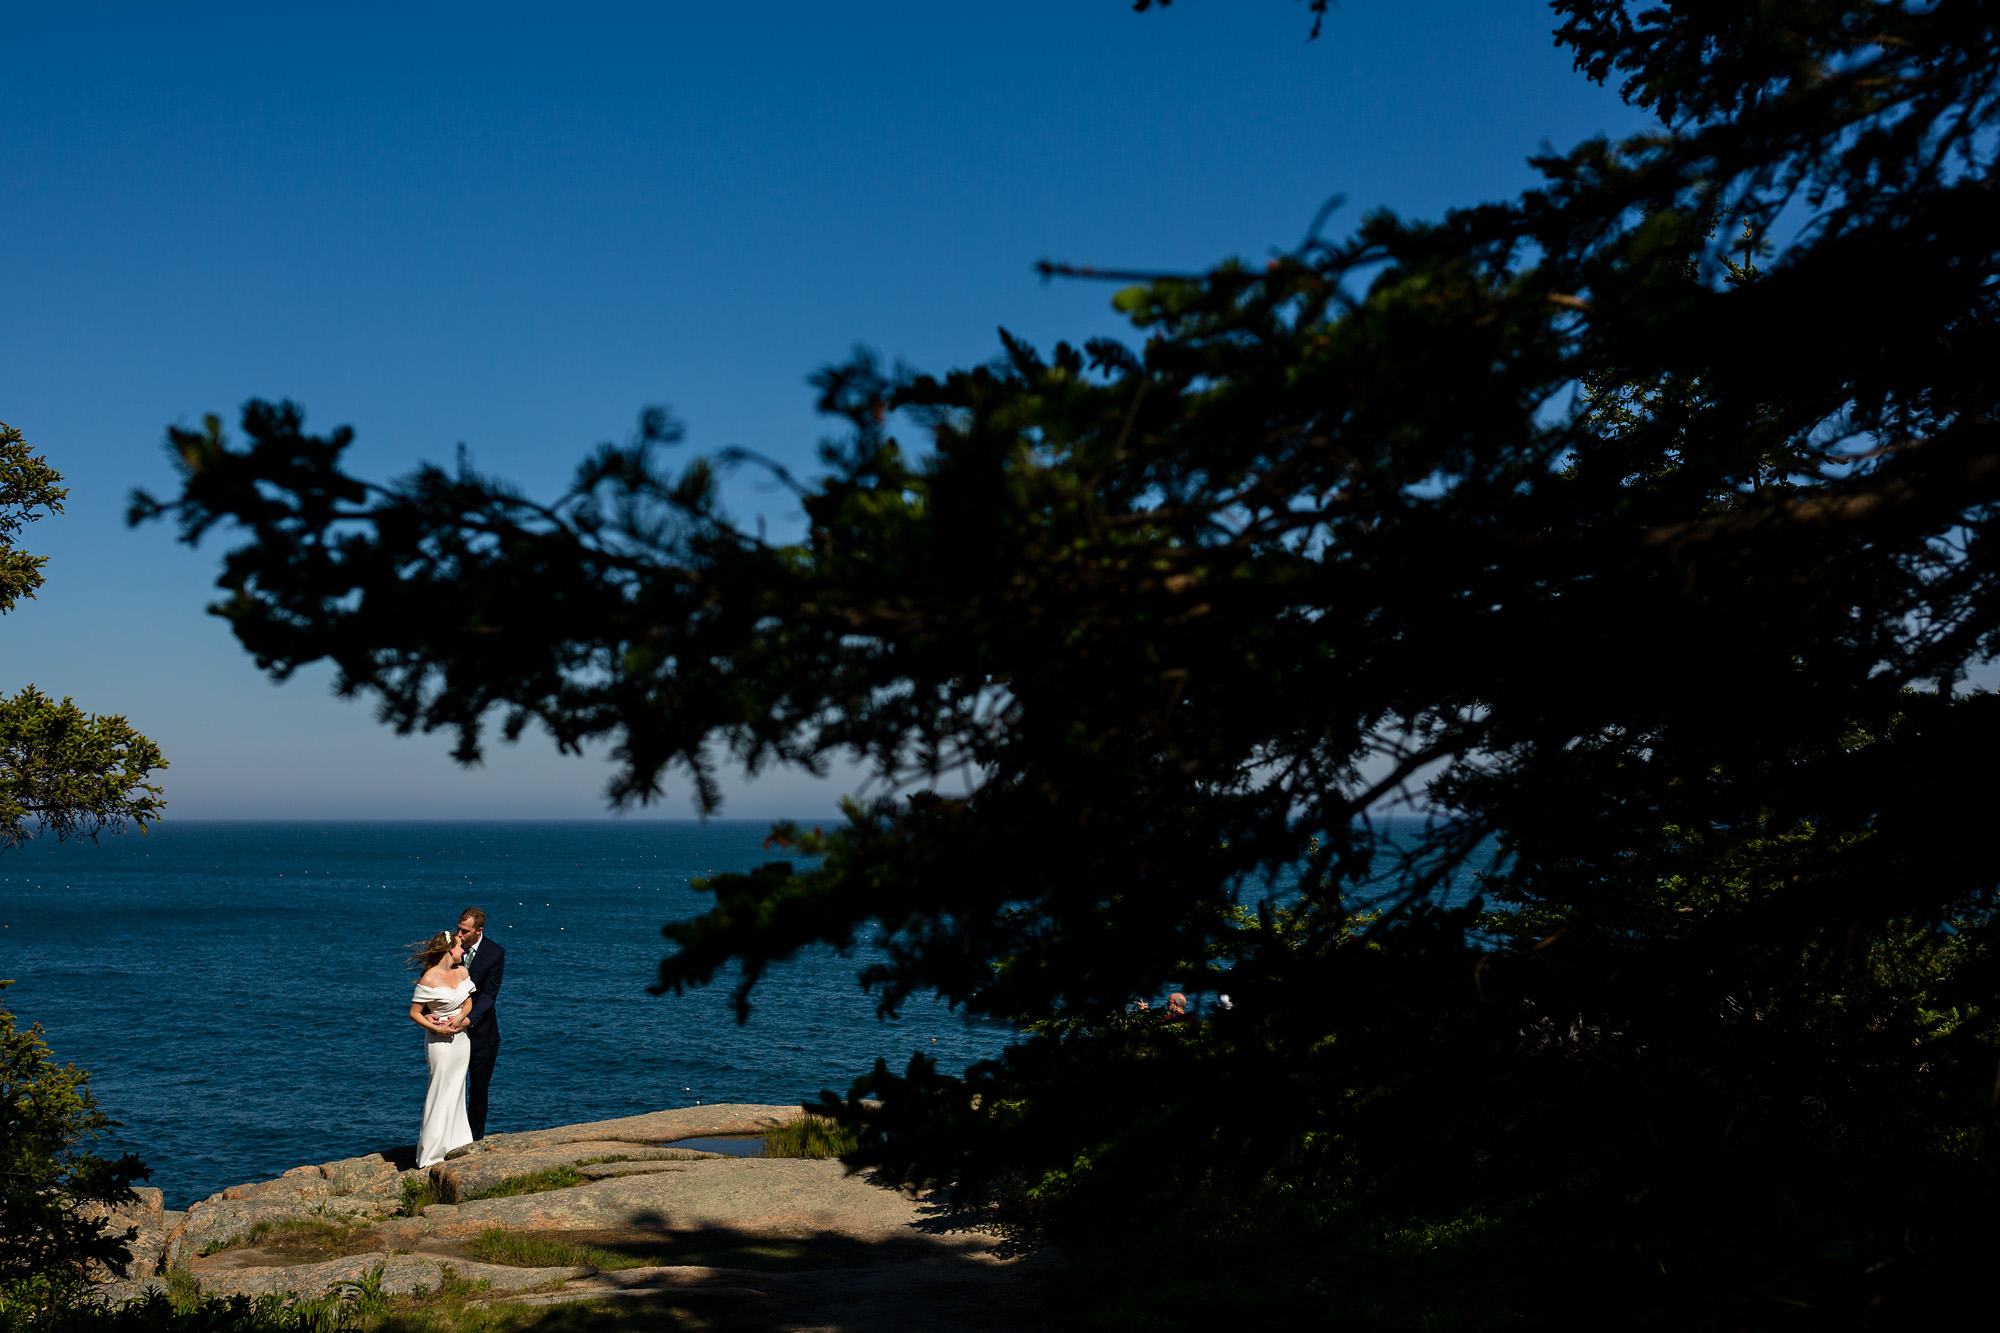 Wedding portraits in Acadia National Park, Maine